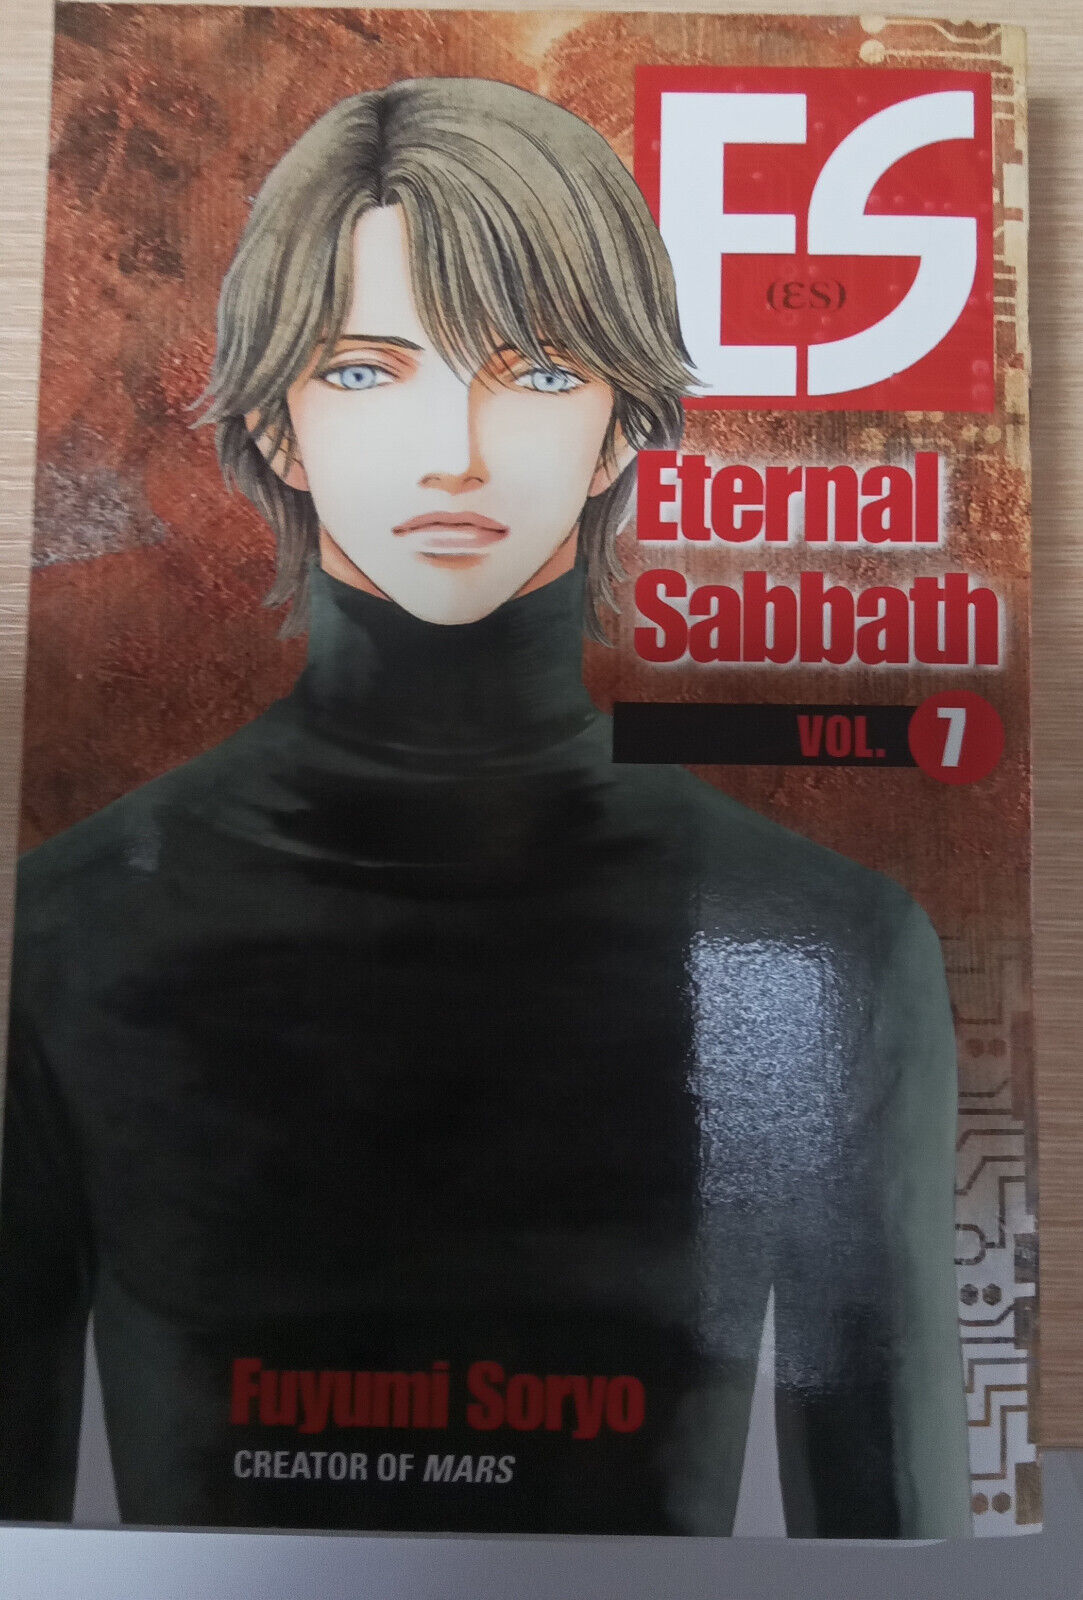 ES vol. 7 Fuyumi Soryo - Kodansha English - Eternal Sabbath Nice copies